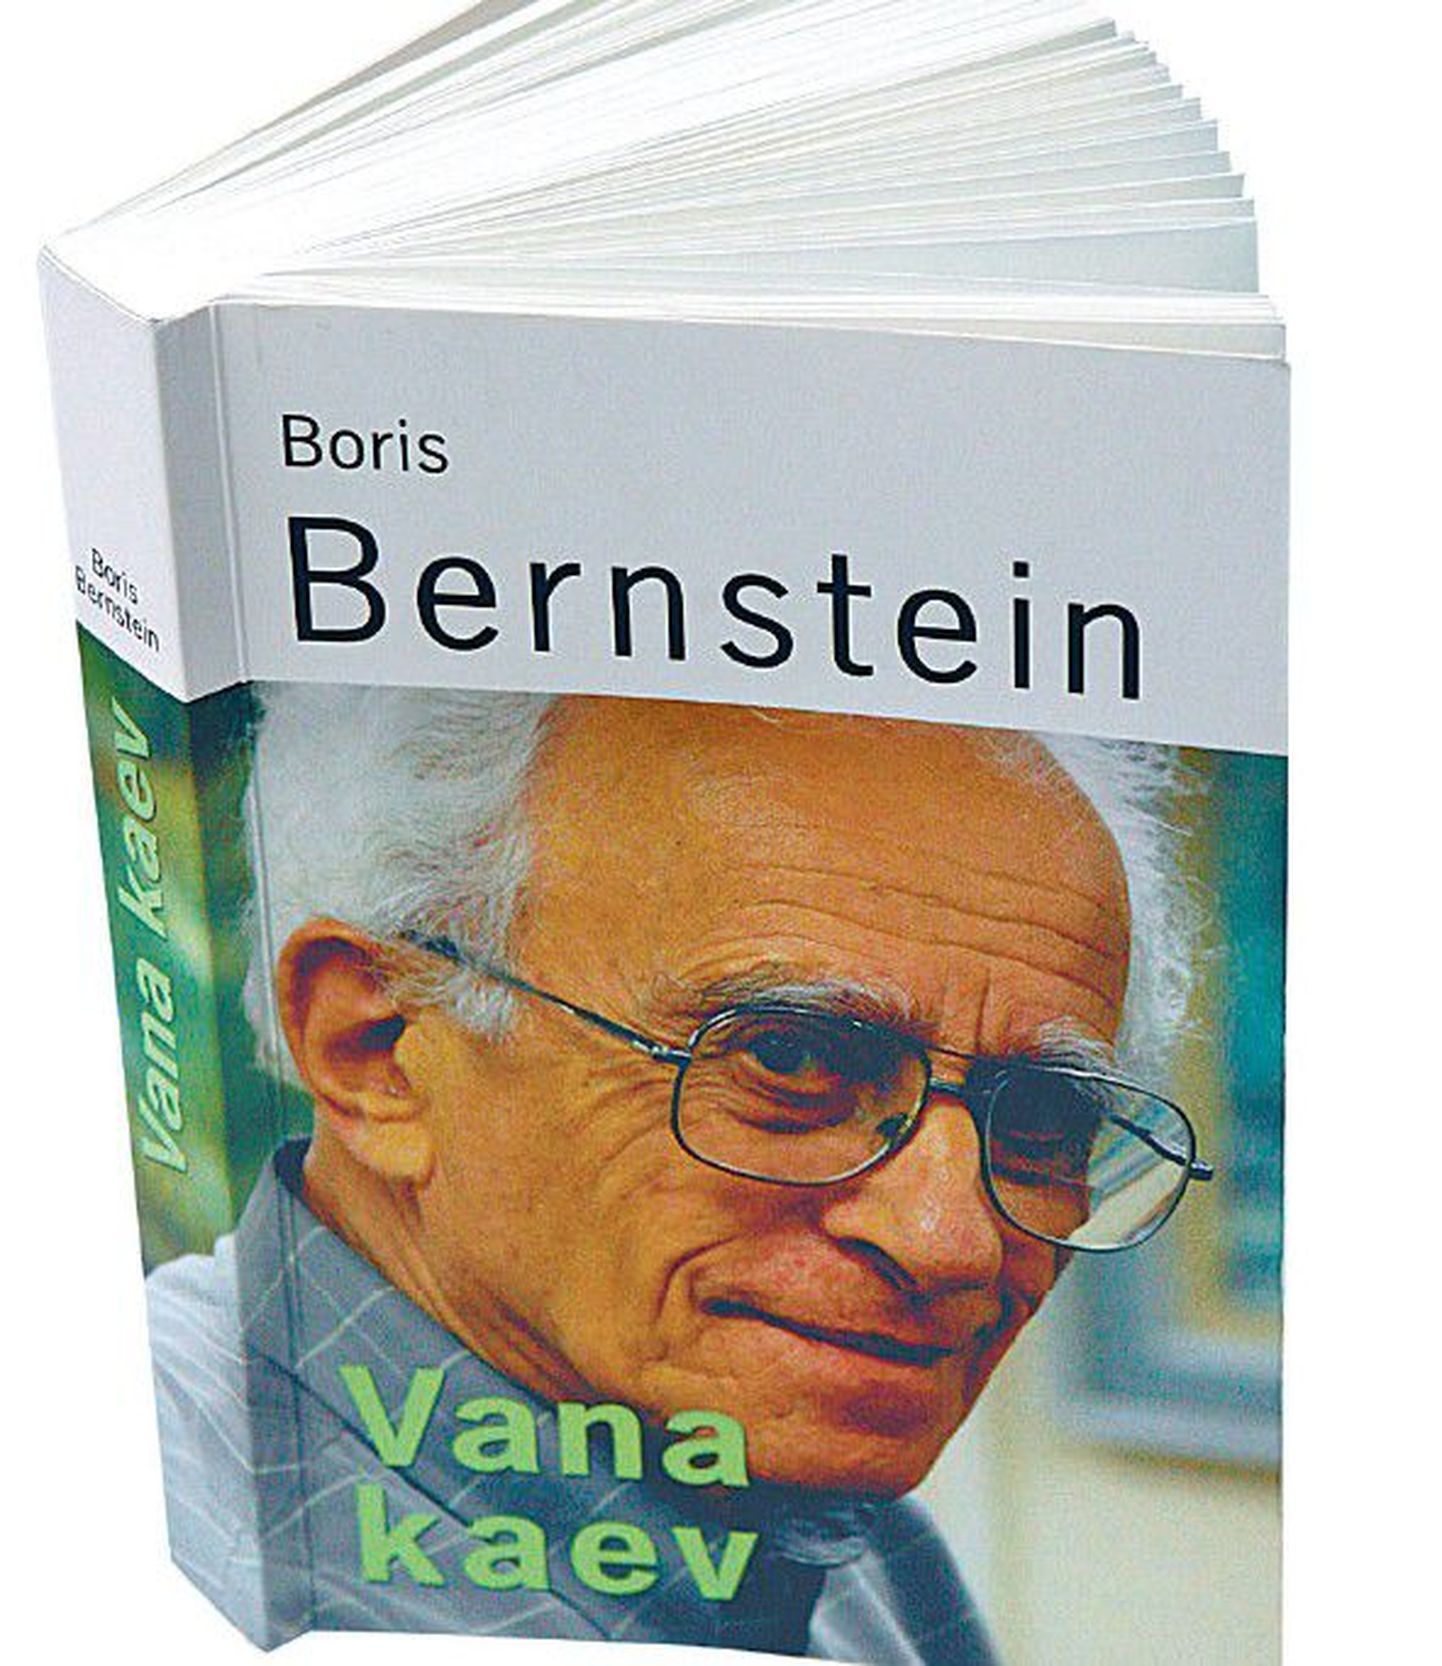 Boris Bernstein.